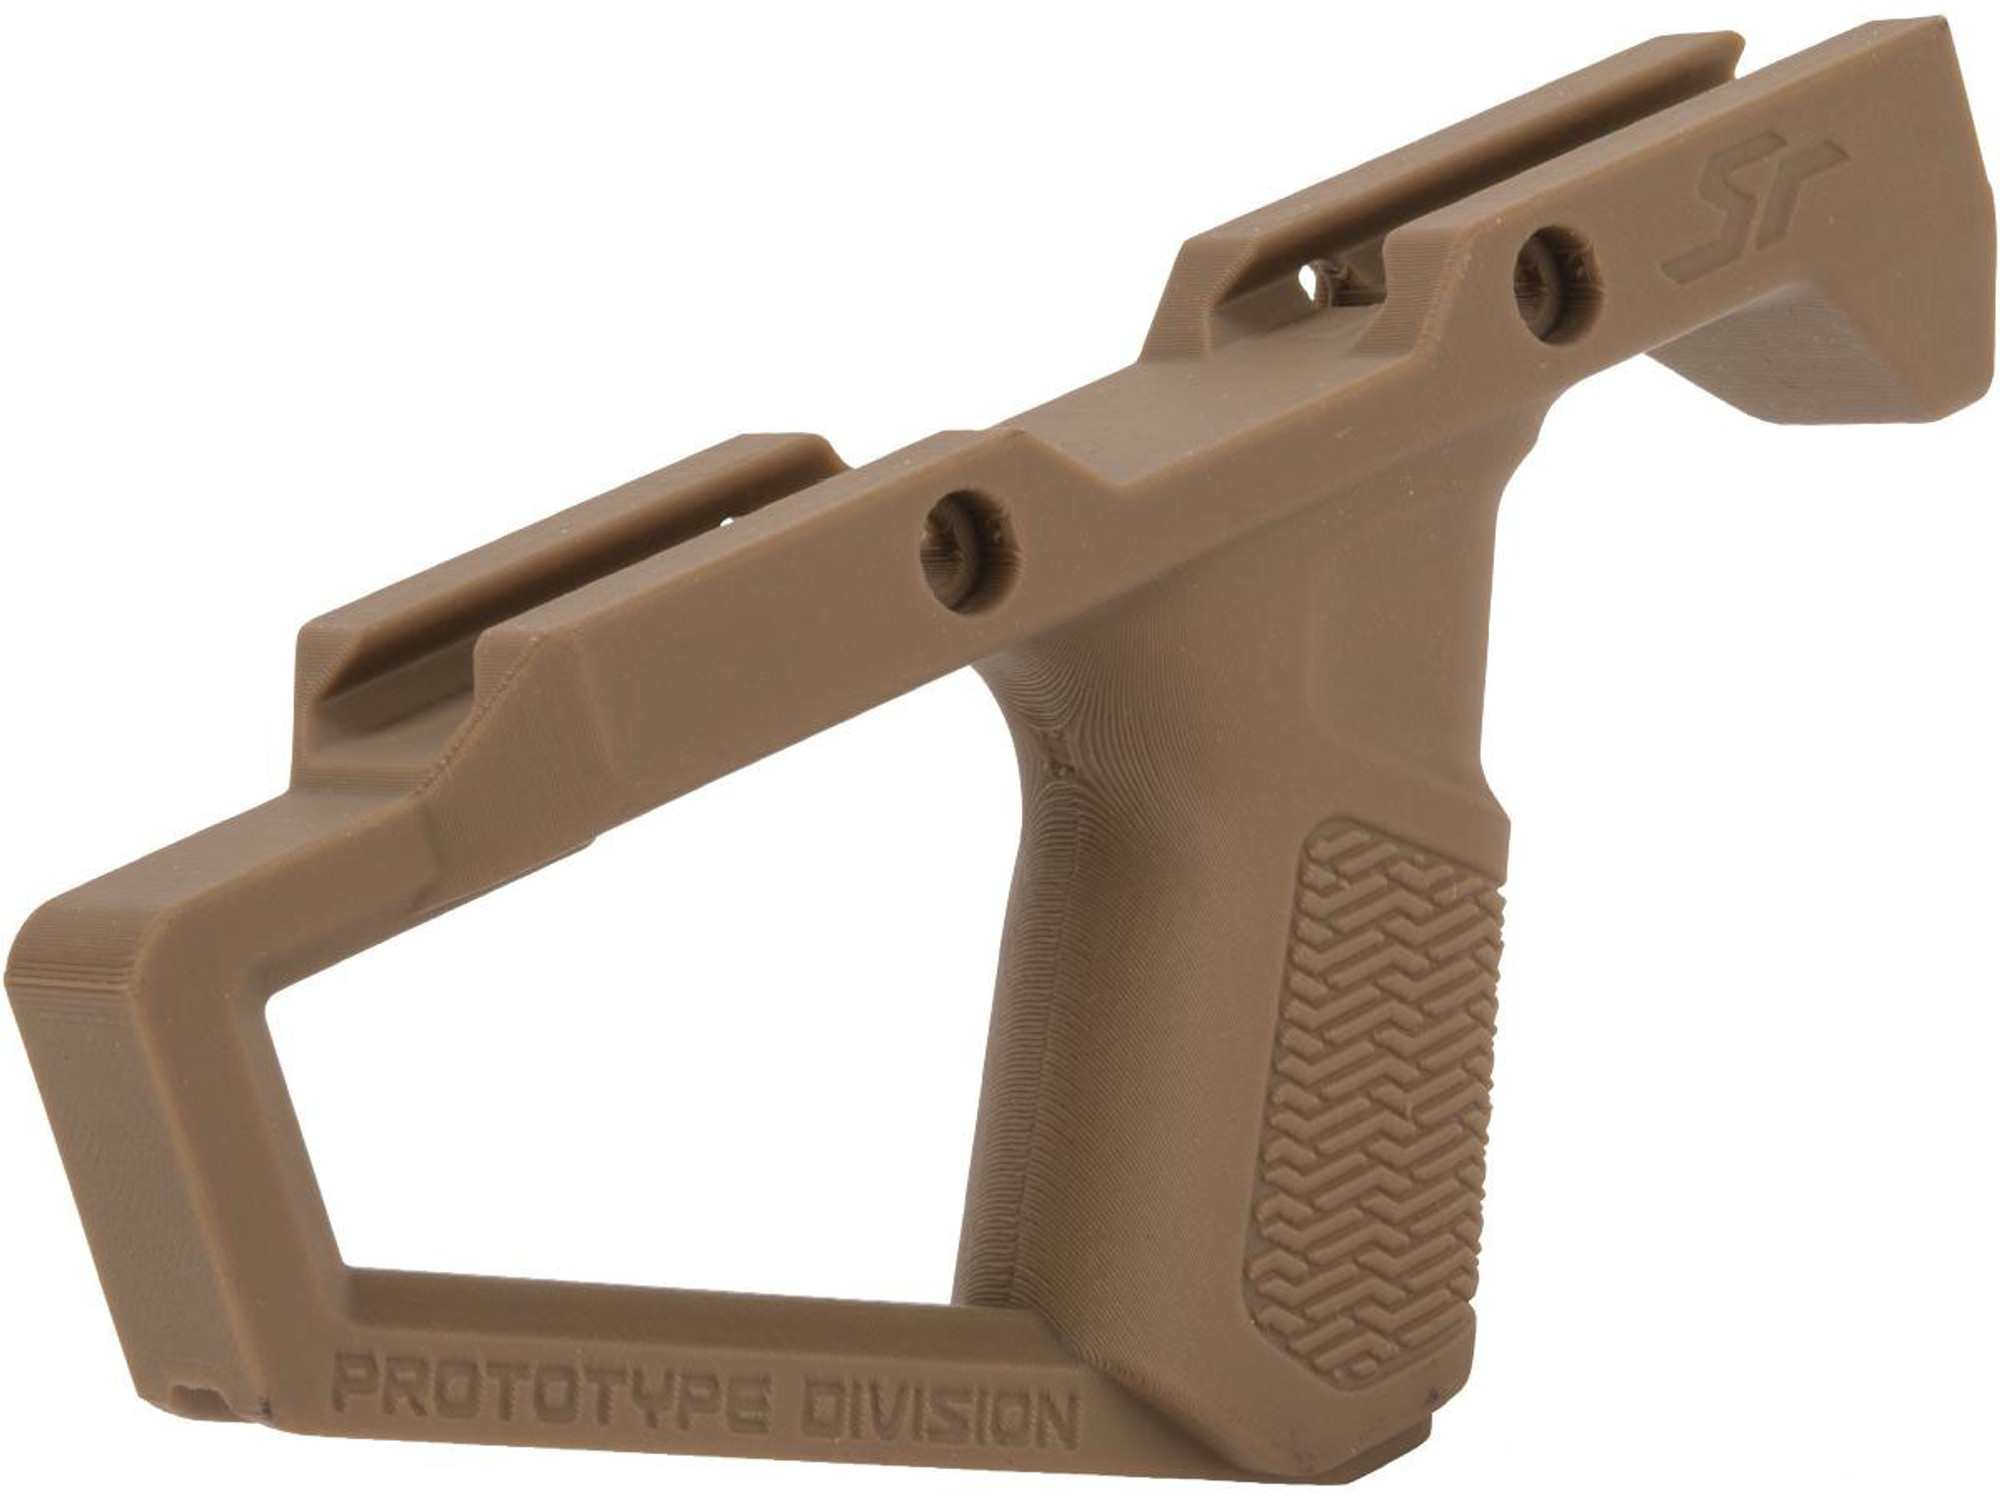 SR-Q Tactical ForeGrip for 20mm Accessory Rails (Color: Tan)